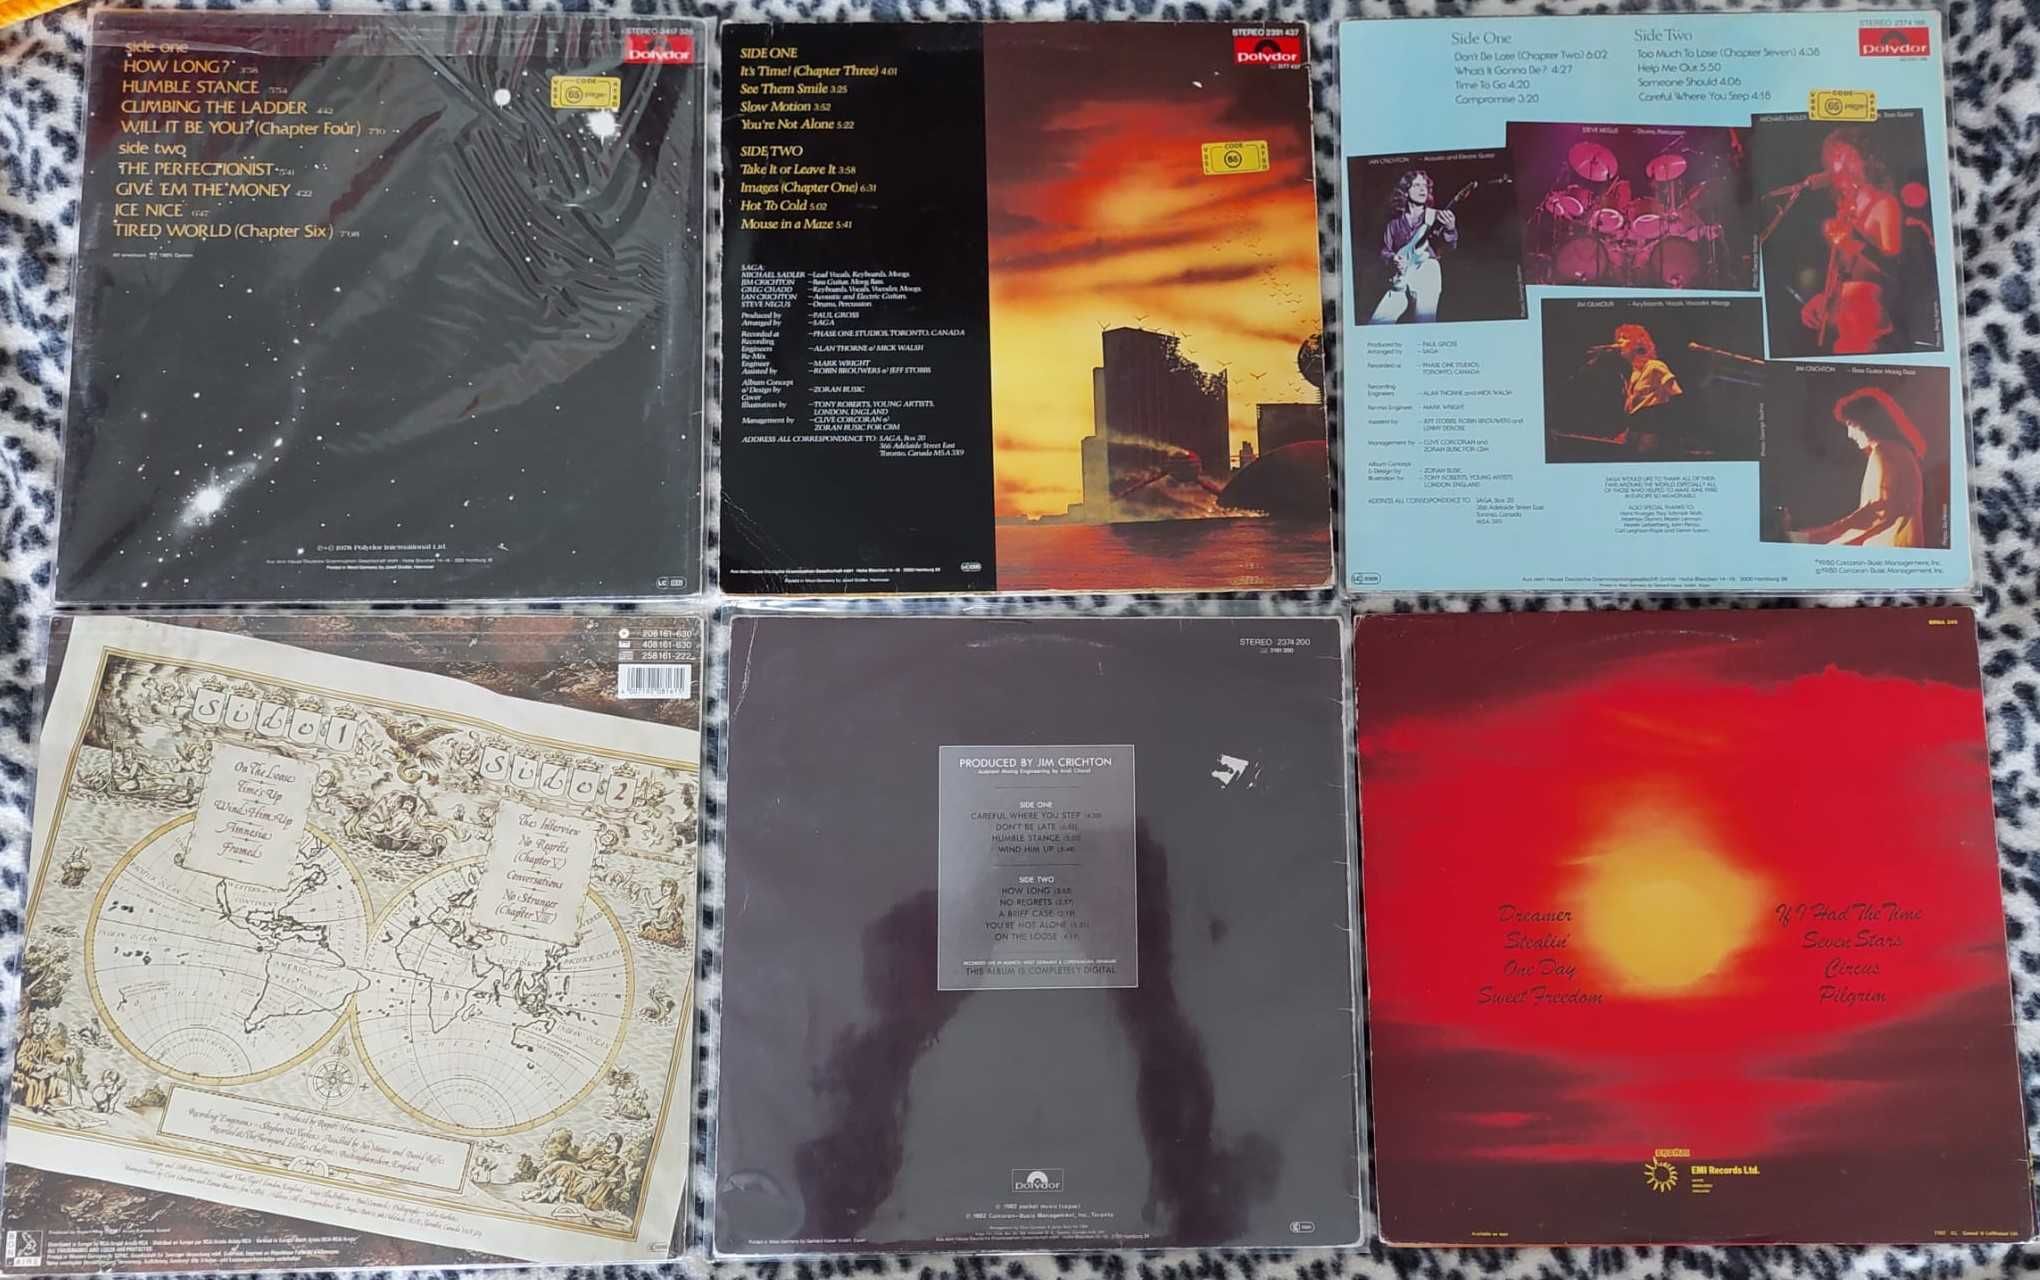 Vinyl-uri cu muzica rock, metal, pop rock (LP, 7", 12") part1